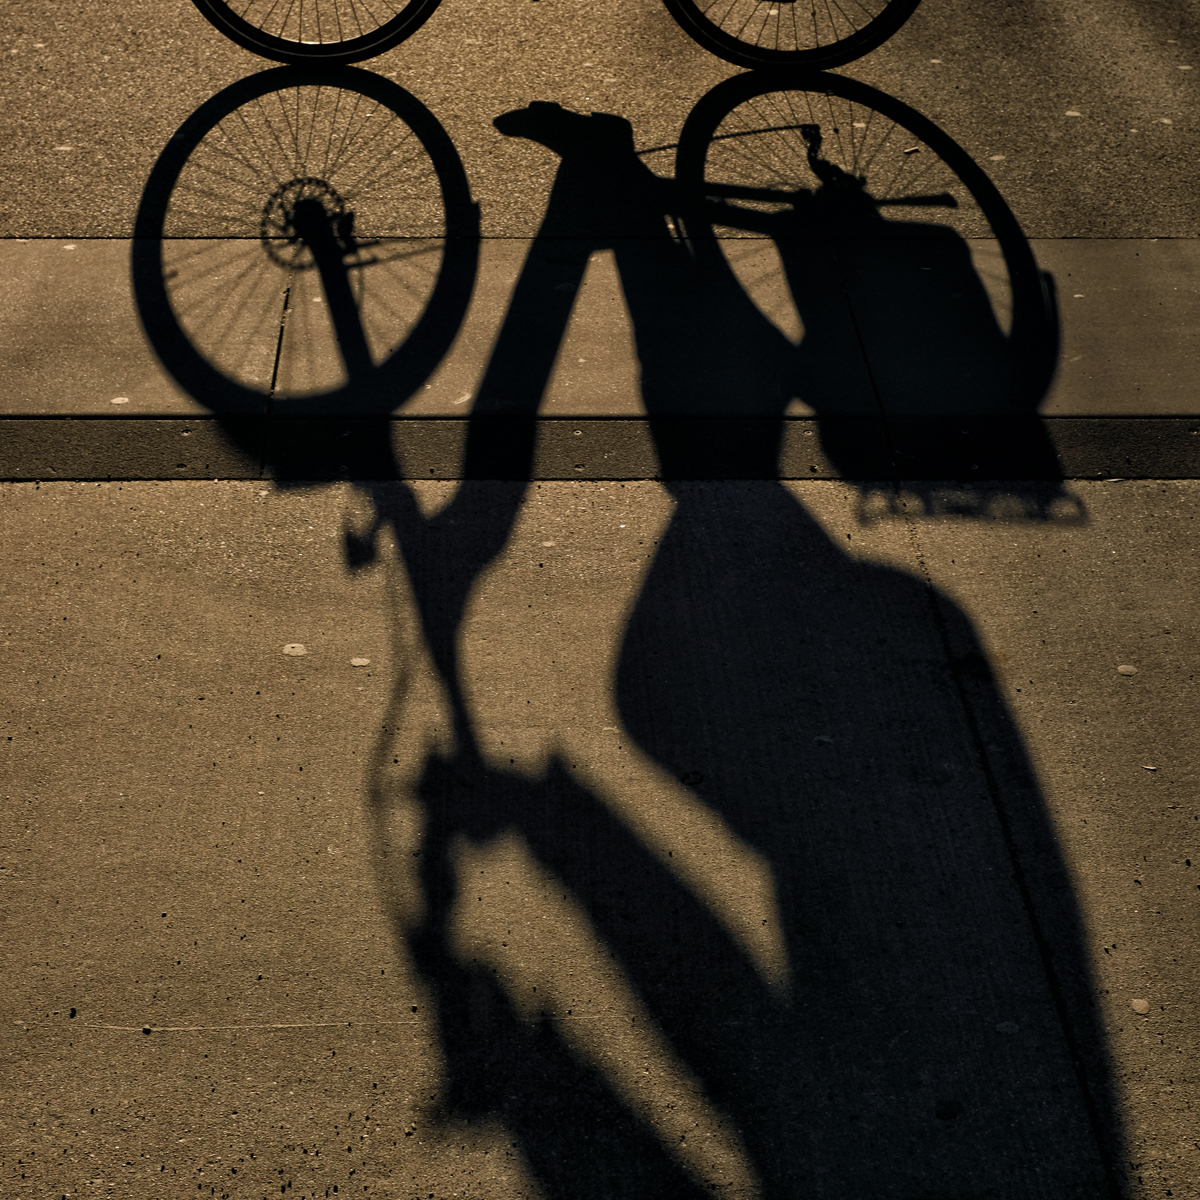 Bild: Fahrrad fahren: Schatten